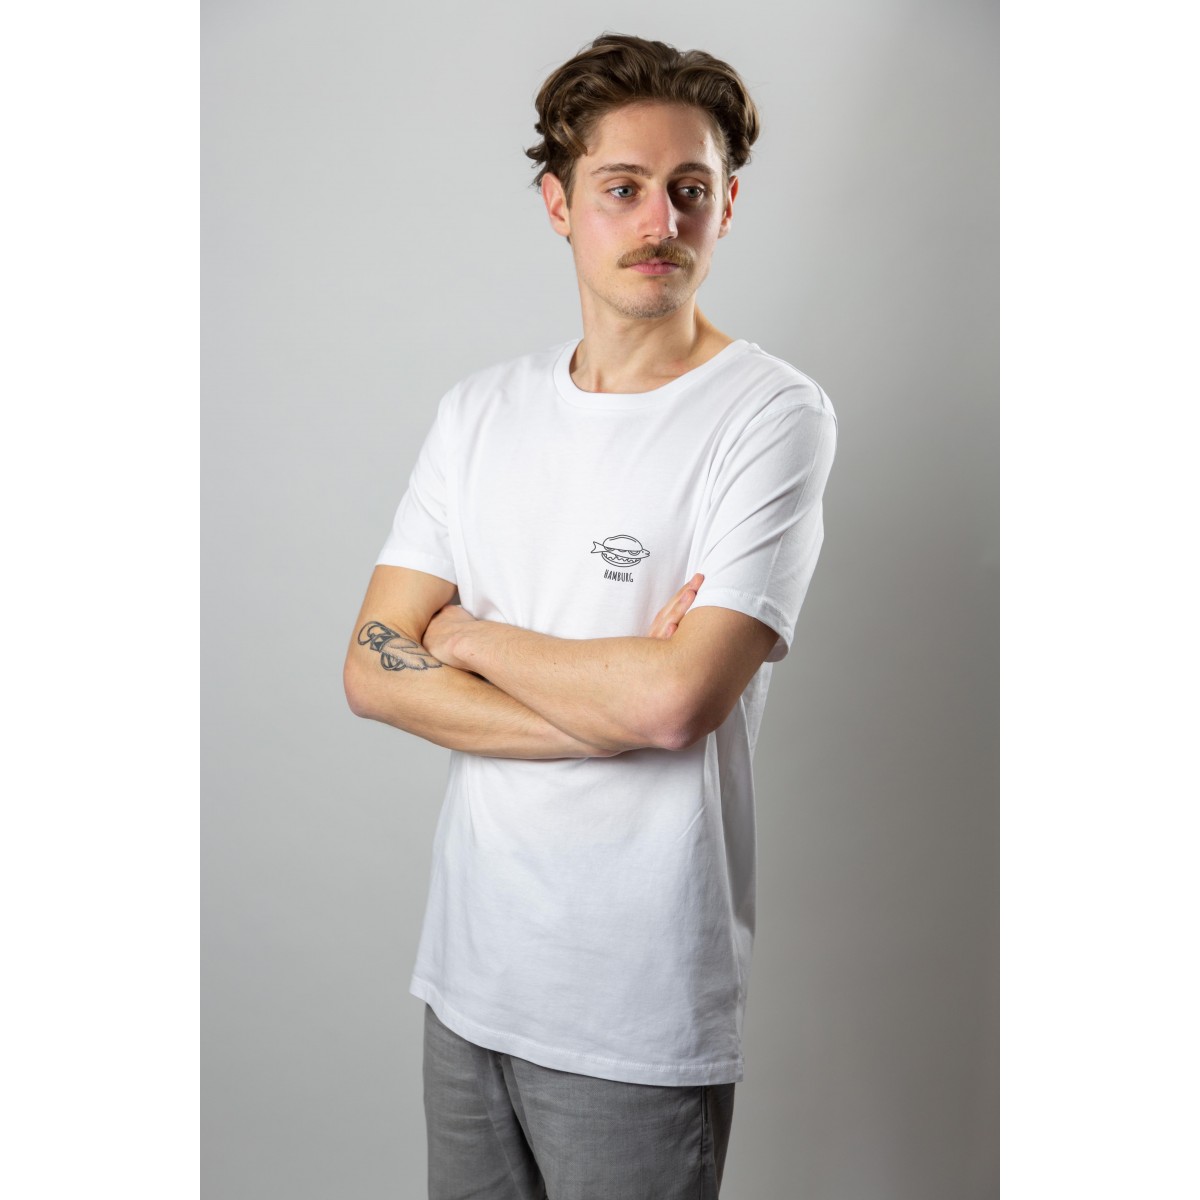 Charles / Shirt Hamburg I / 100% Biobaumwolle / Fair Wear zertifiziert 
